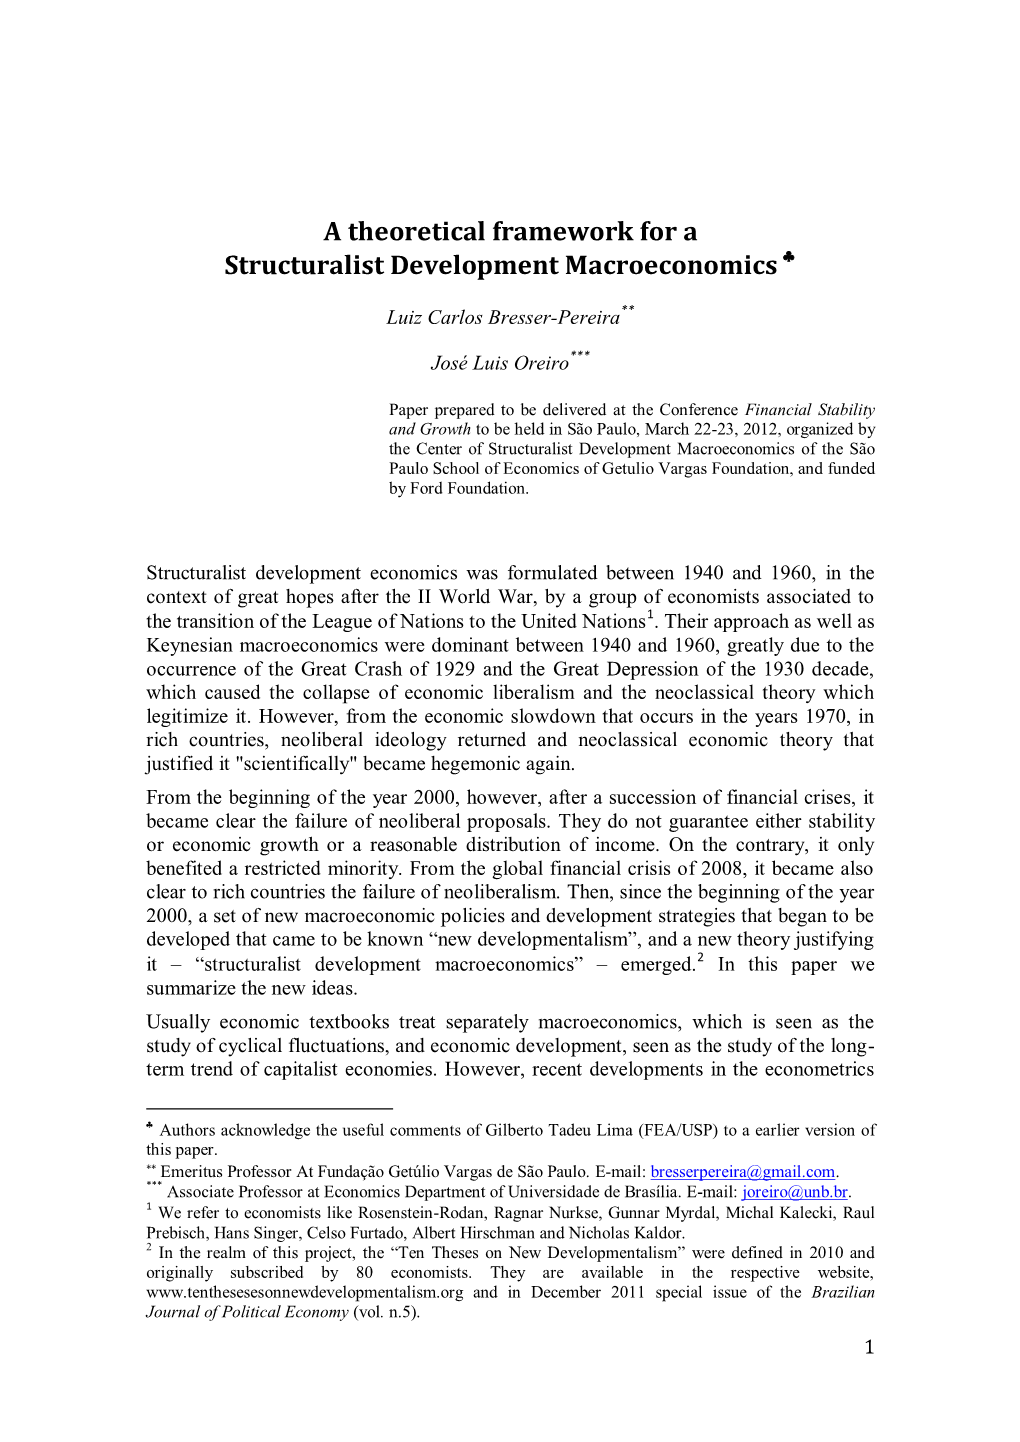 A Theoretical Framework for a Structuralist Development Macroeconomics